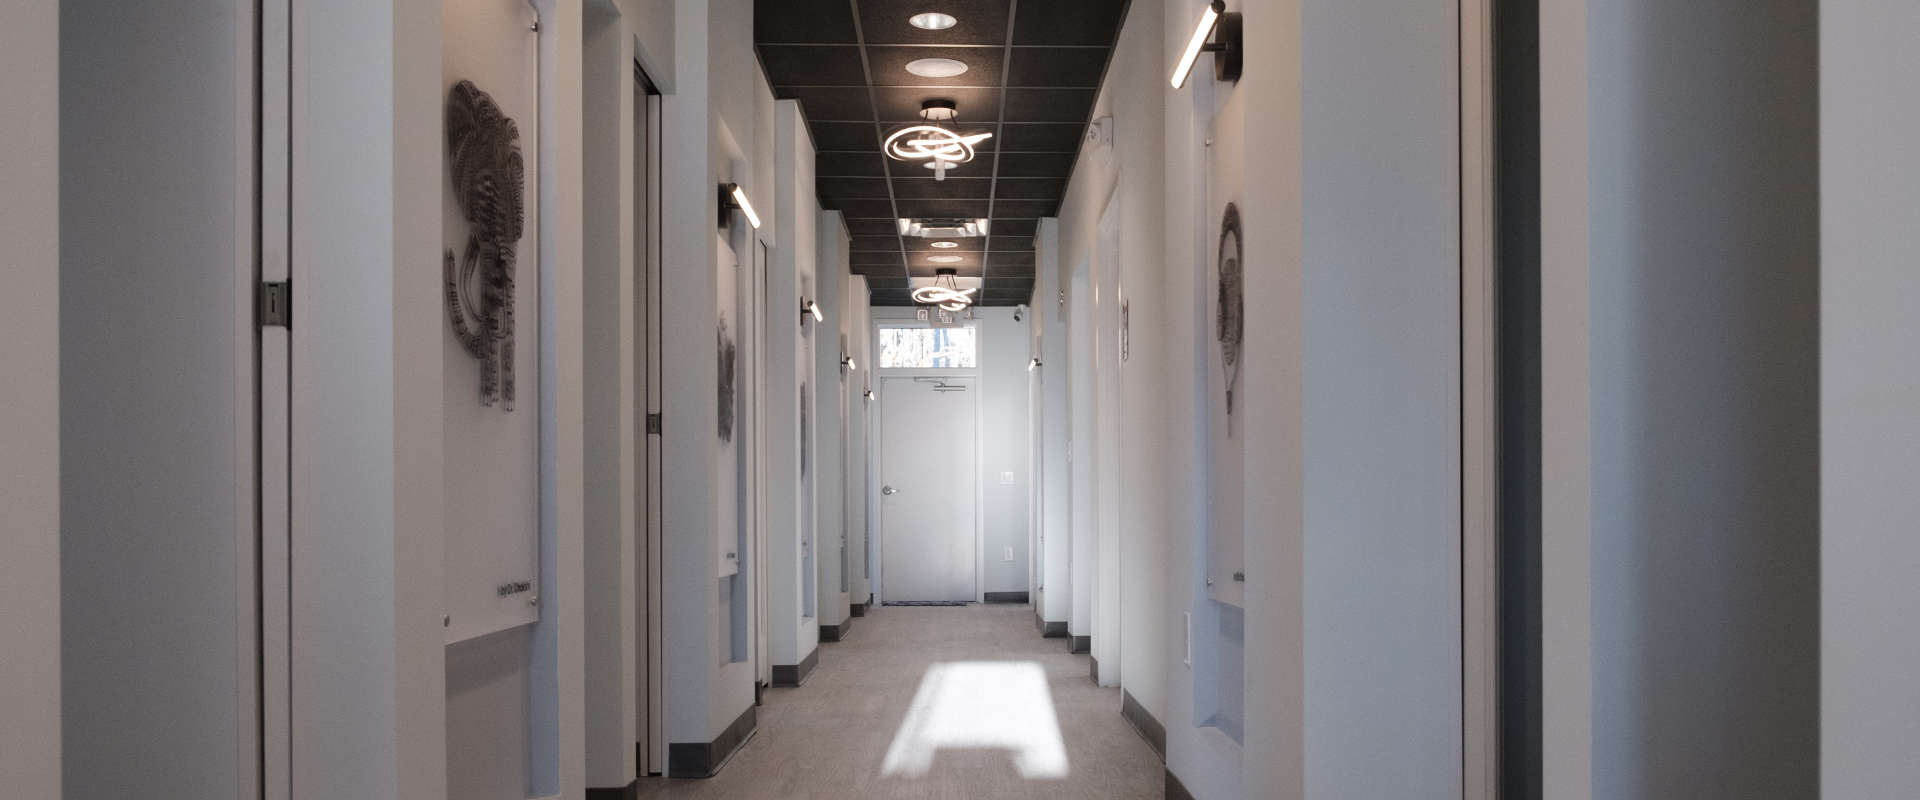 Carrington Square Dental hallway.